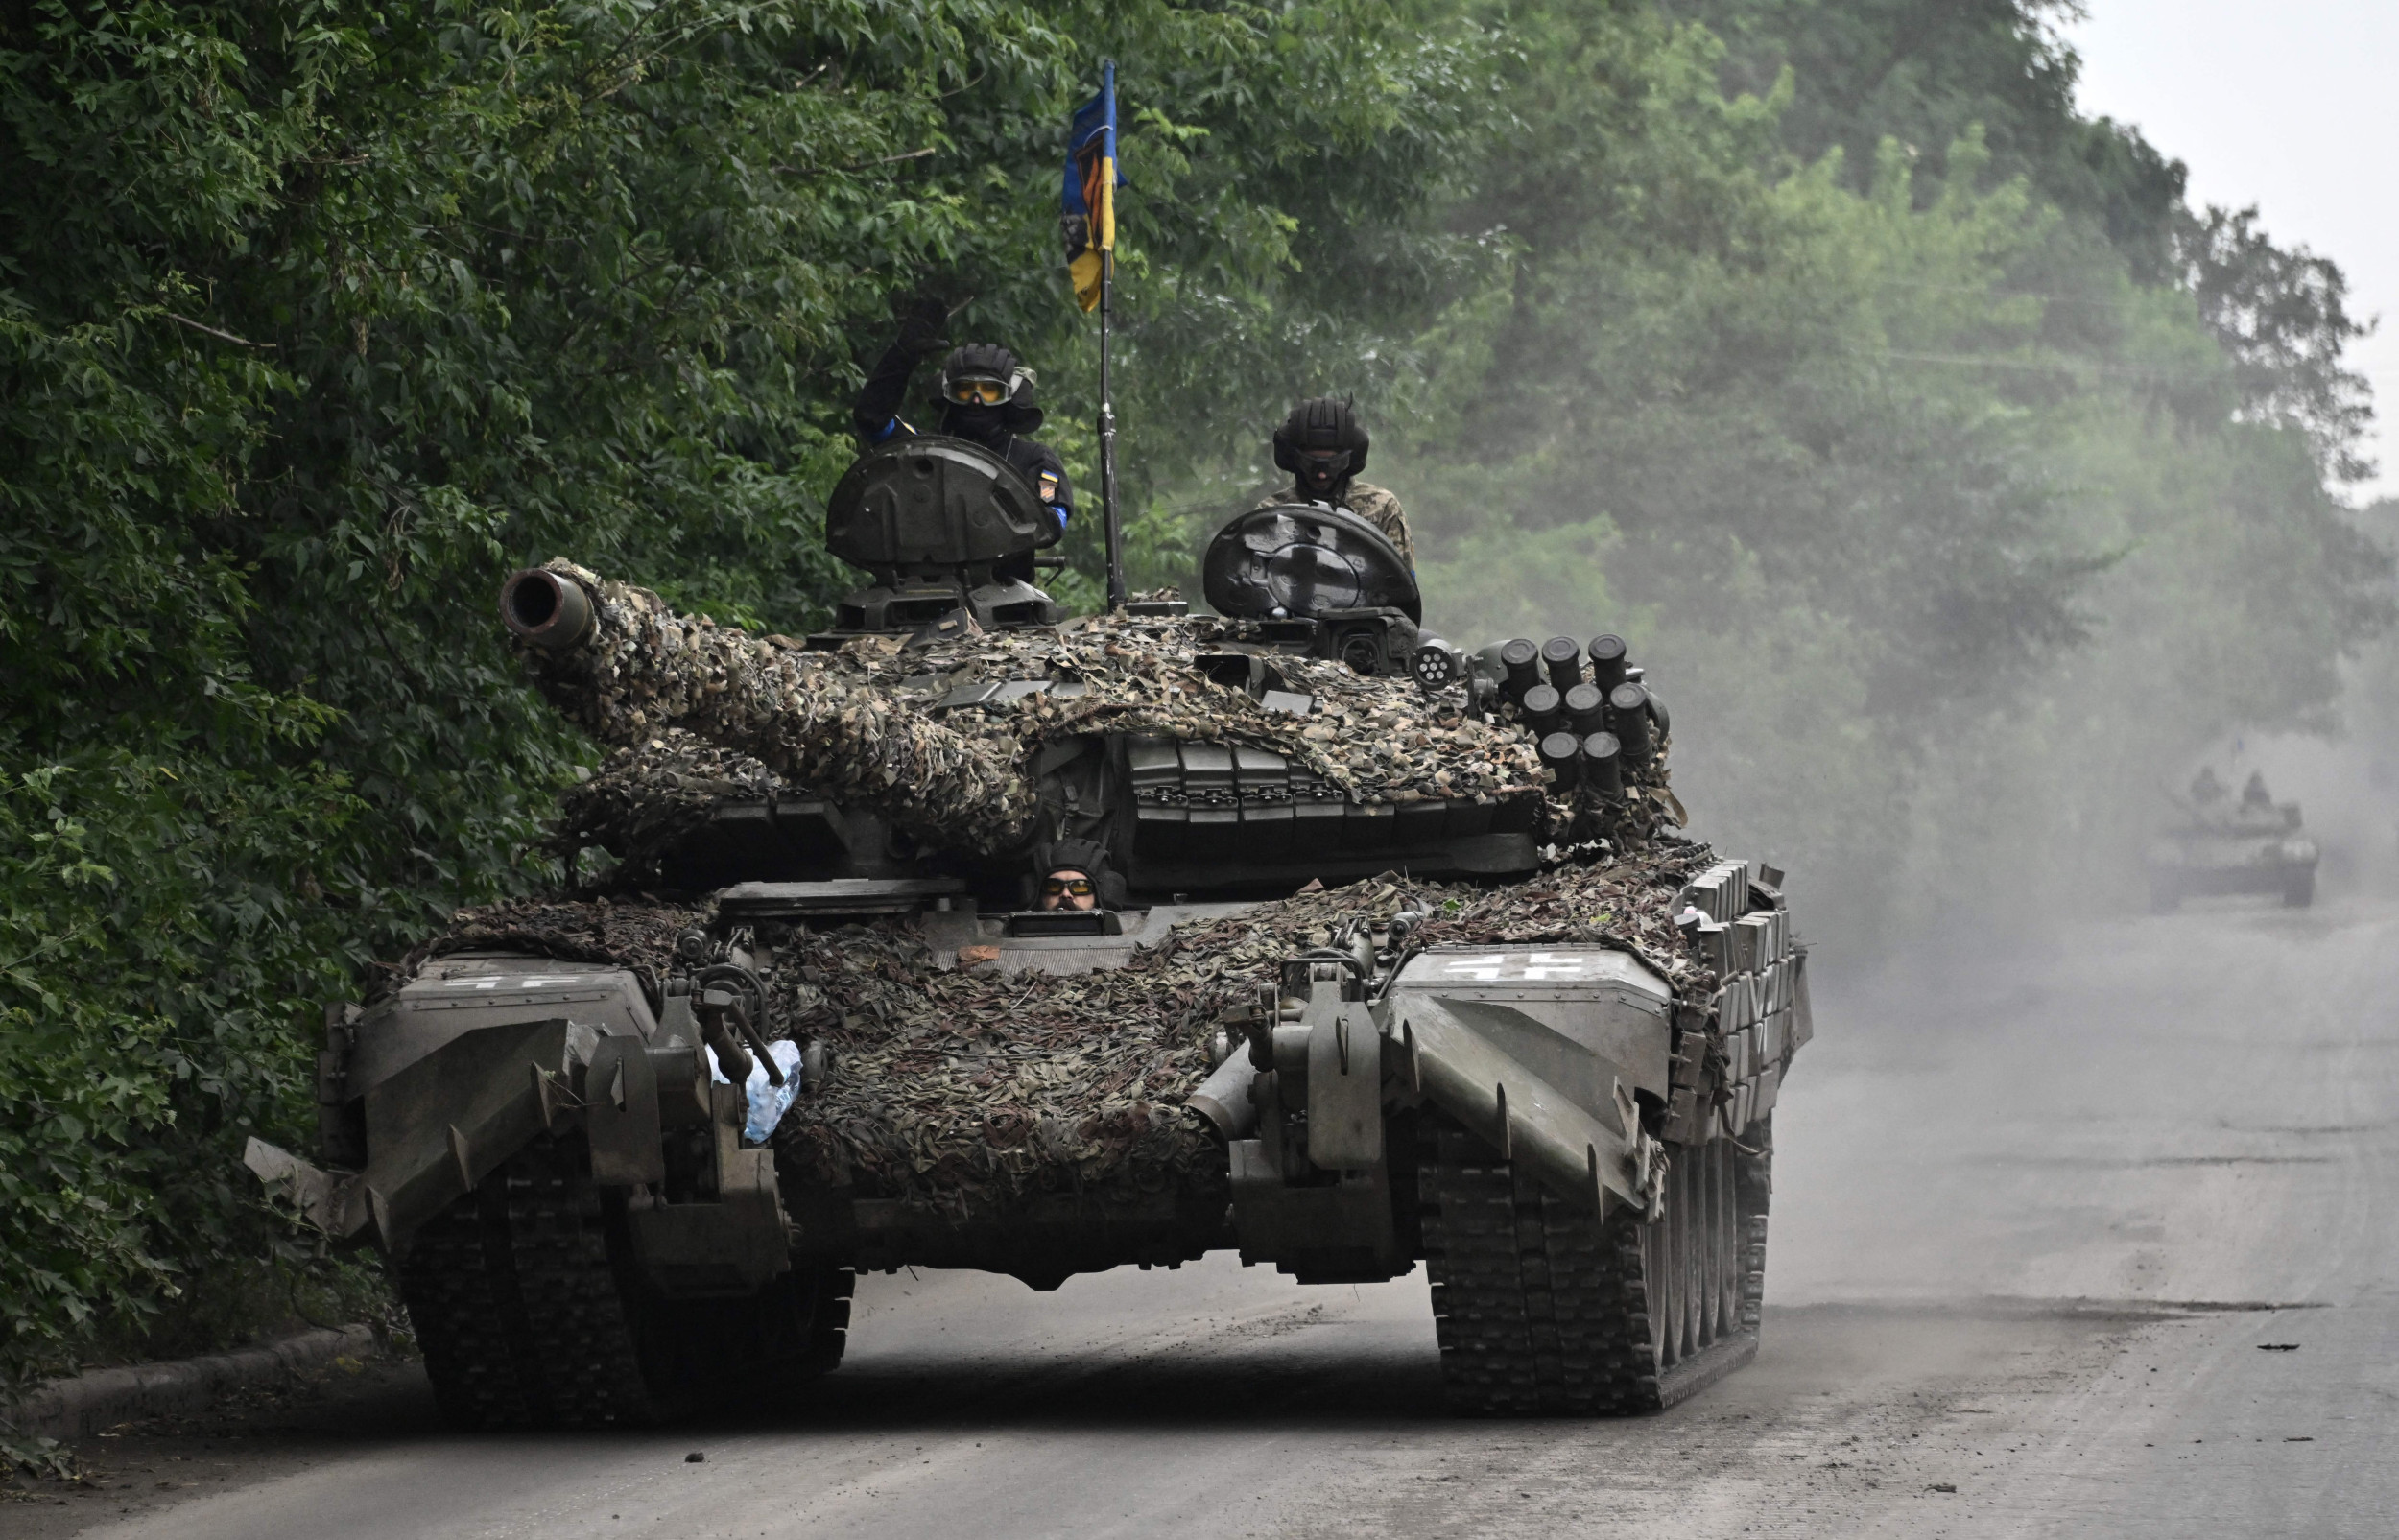 Ukraine weapons, not membership, are “foremost” NATO priorities: Romania PM